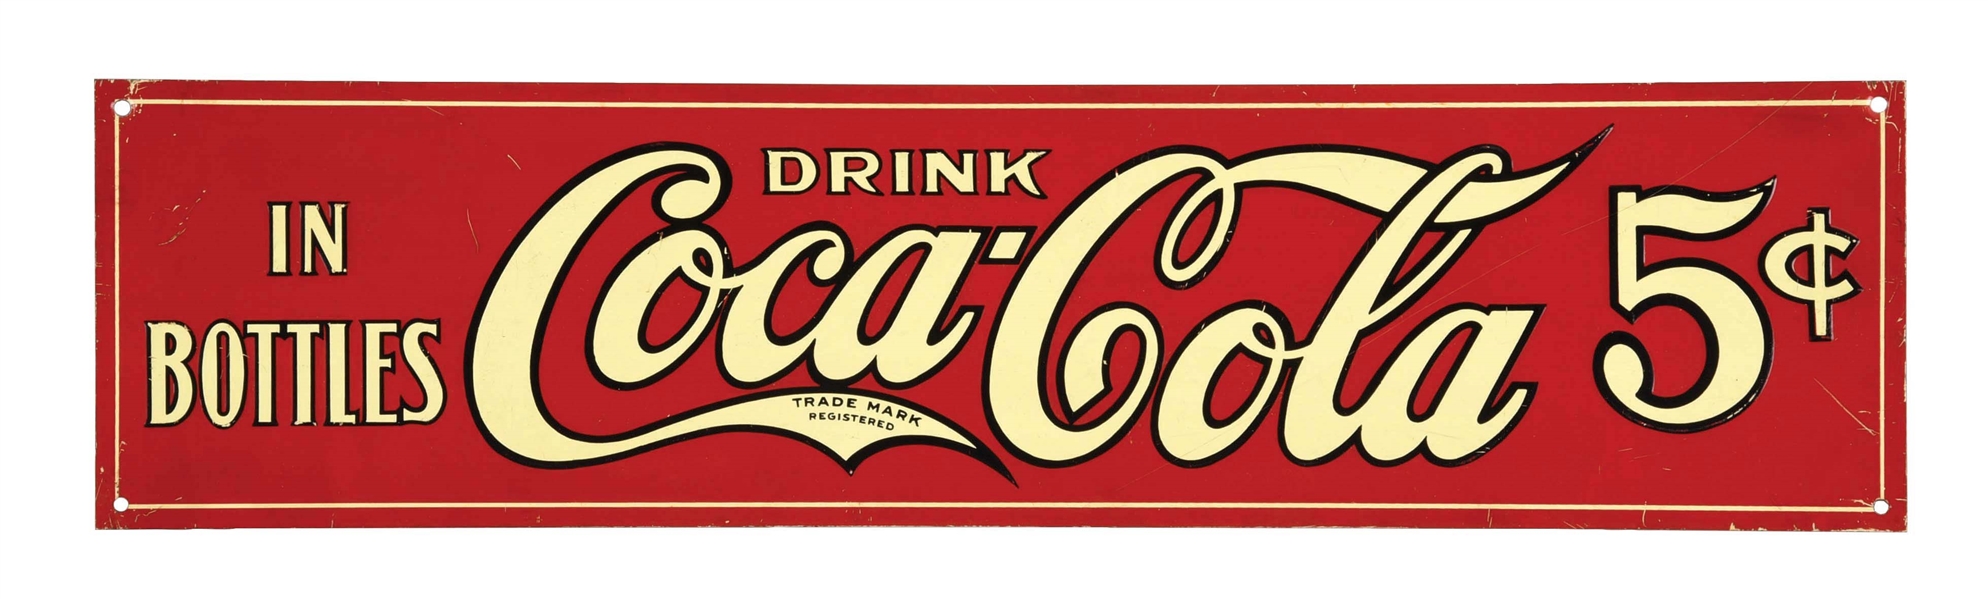 5¢ DRINK COCA-COLA IN BOTTLES TIN SIGN. 